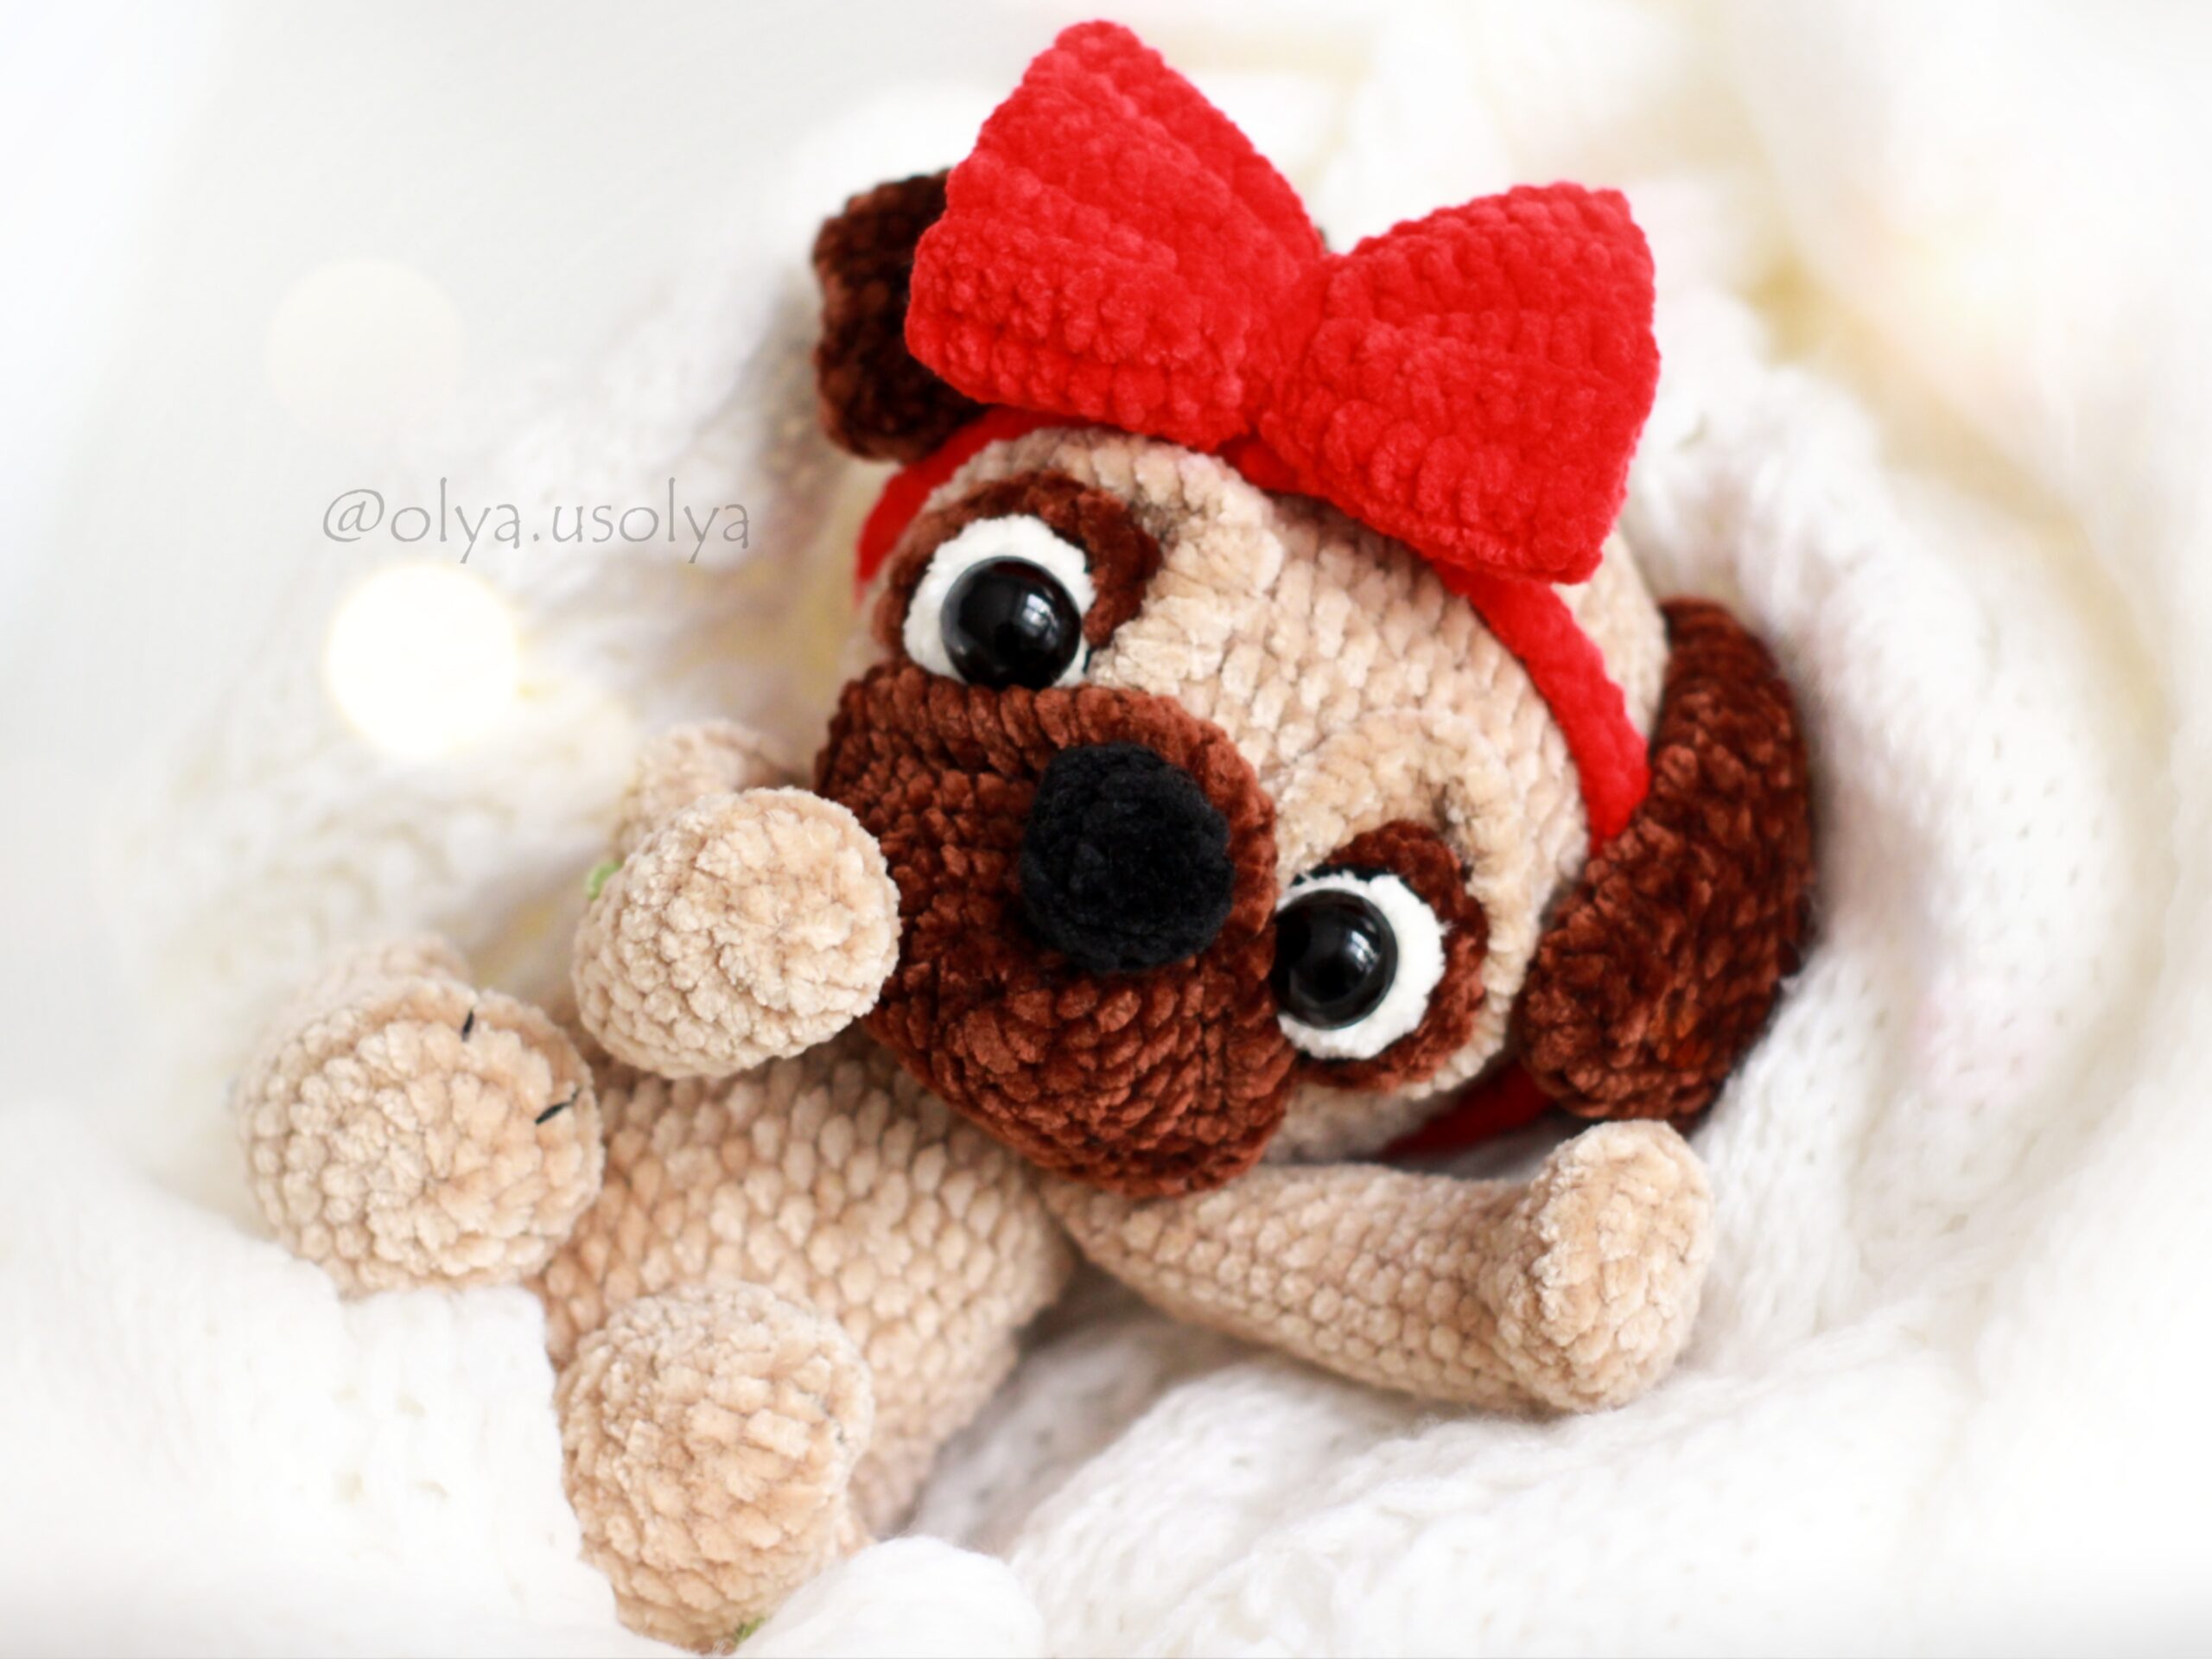 crochet kit - amigurumi pug dog craft kit